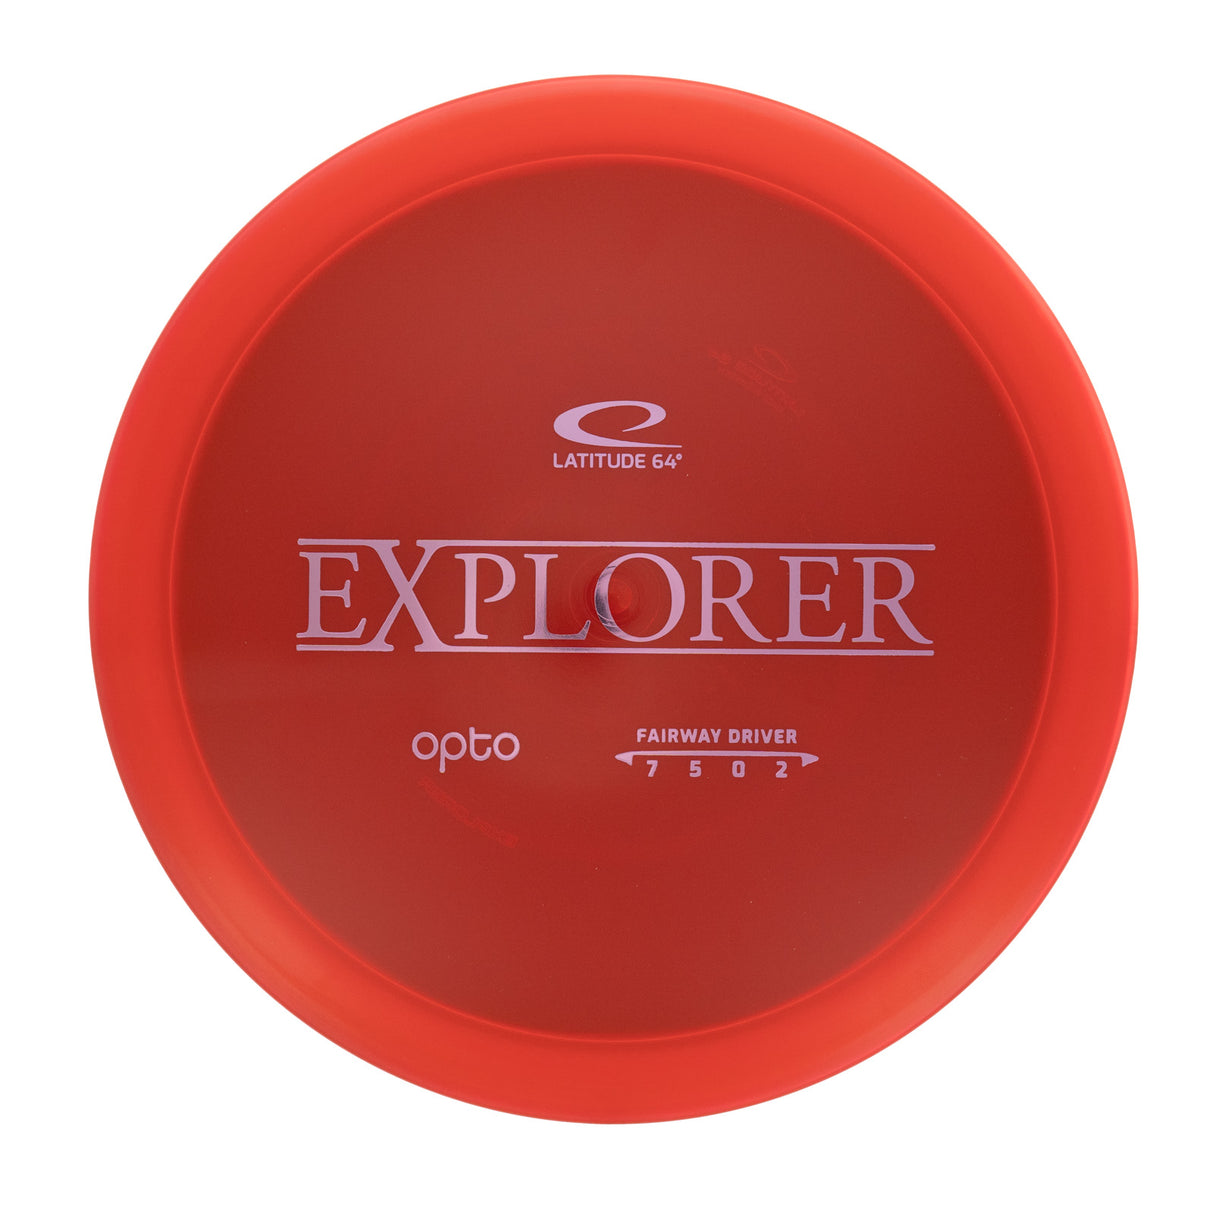 Latitude 64 Explorer - Opto 174g | Style 0001